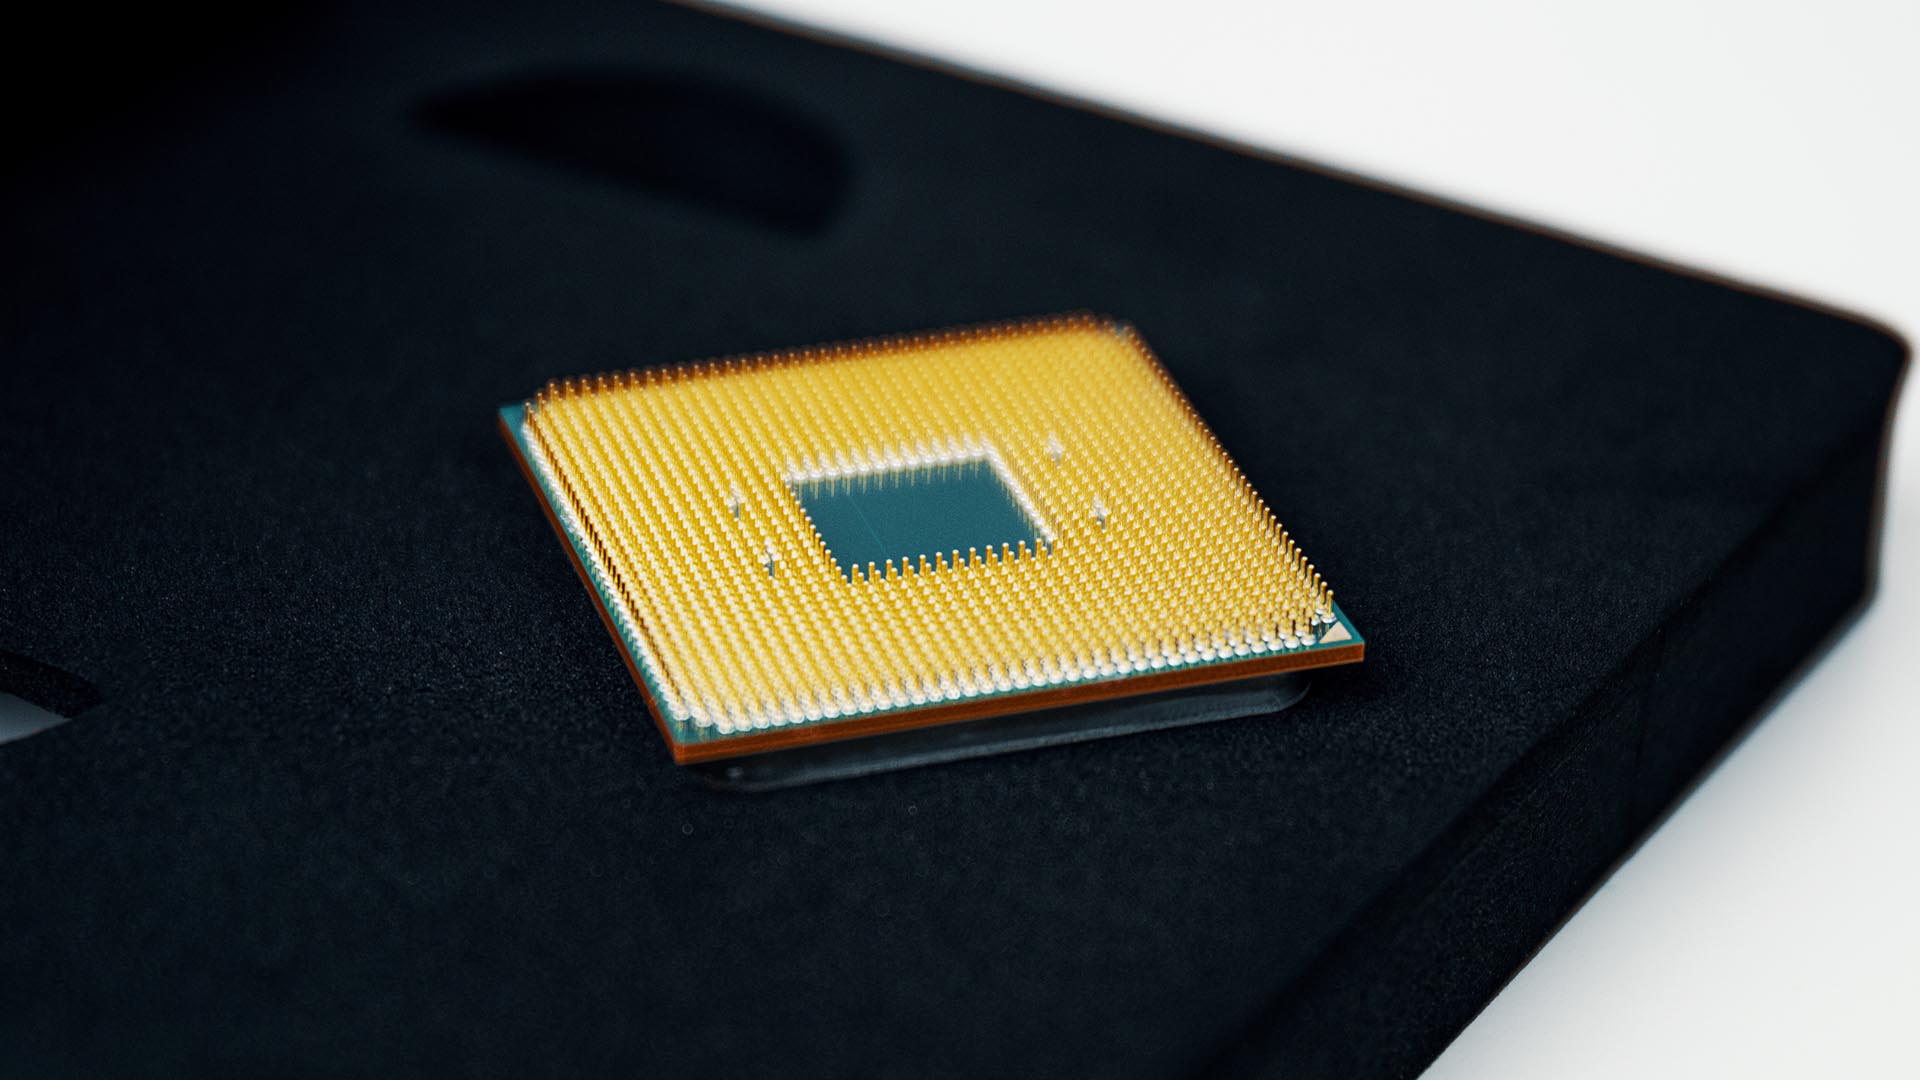 AMD Ryzen 9 3900X review: taking down Intel's ultra-enthusiast 